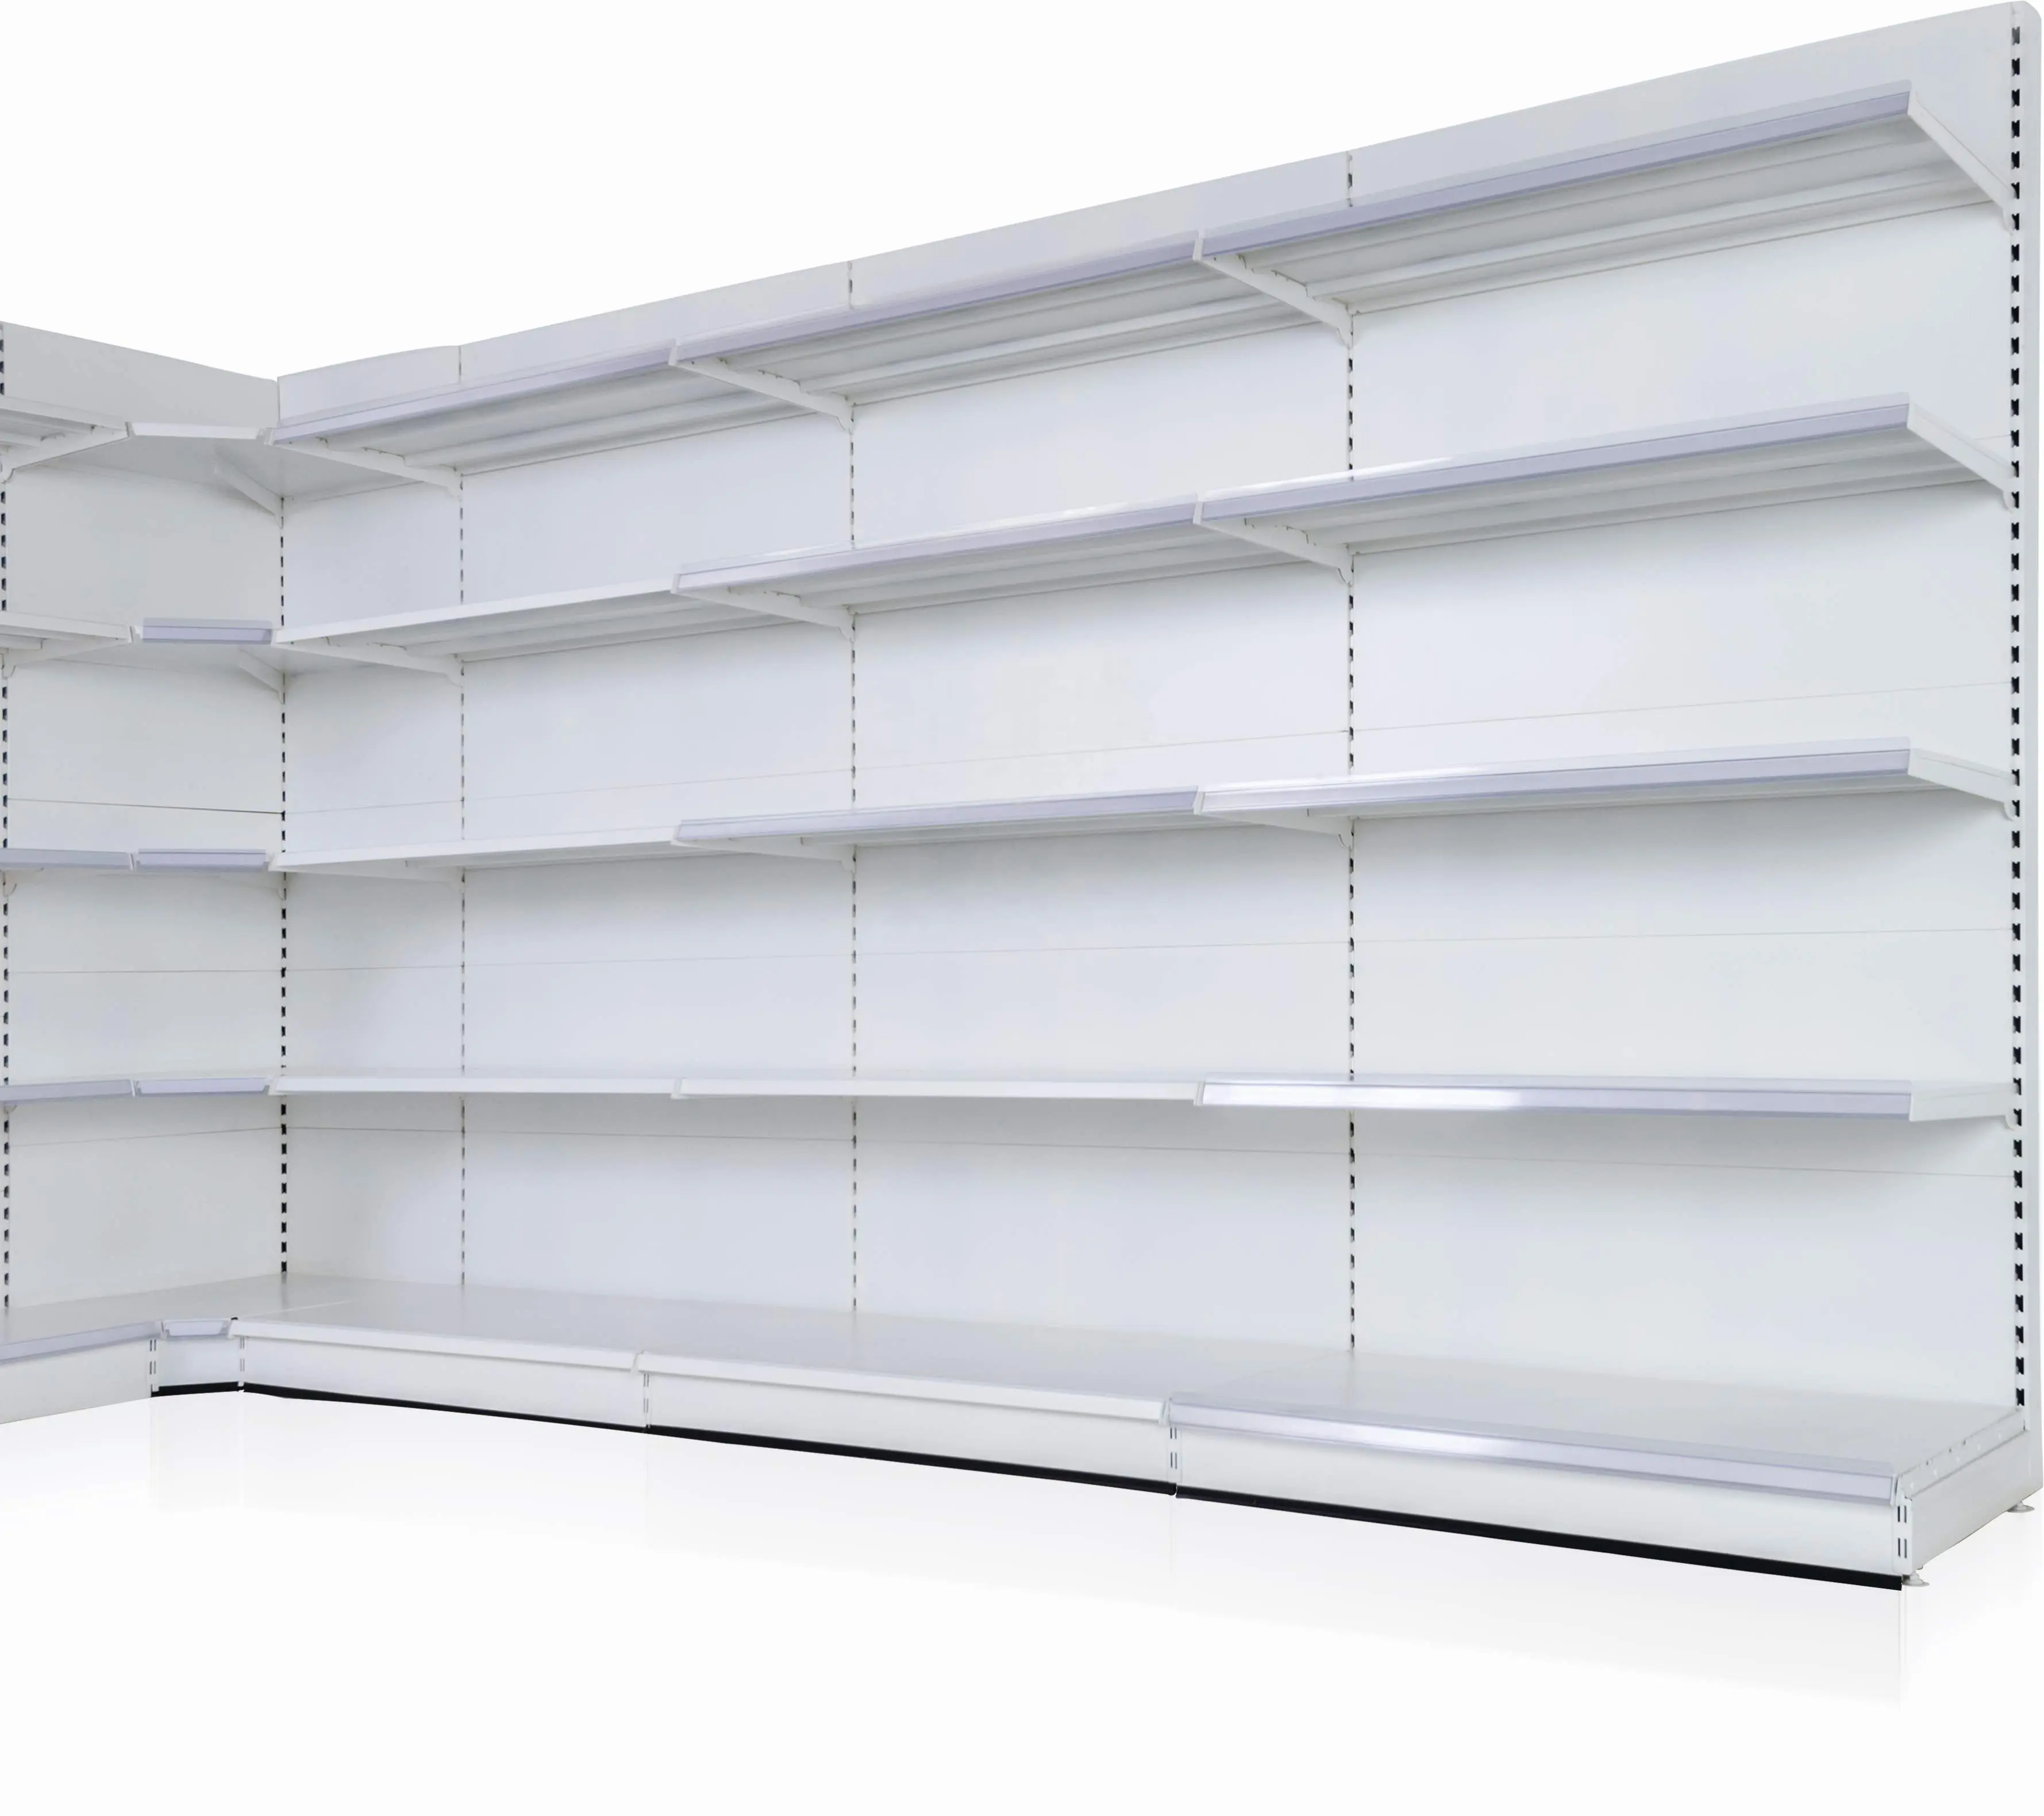 High quality single sided metal supermarket display gondola shelf